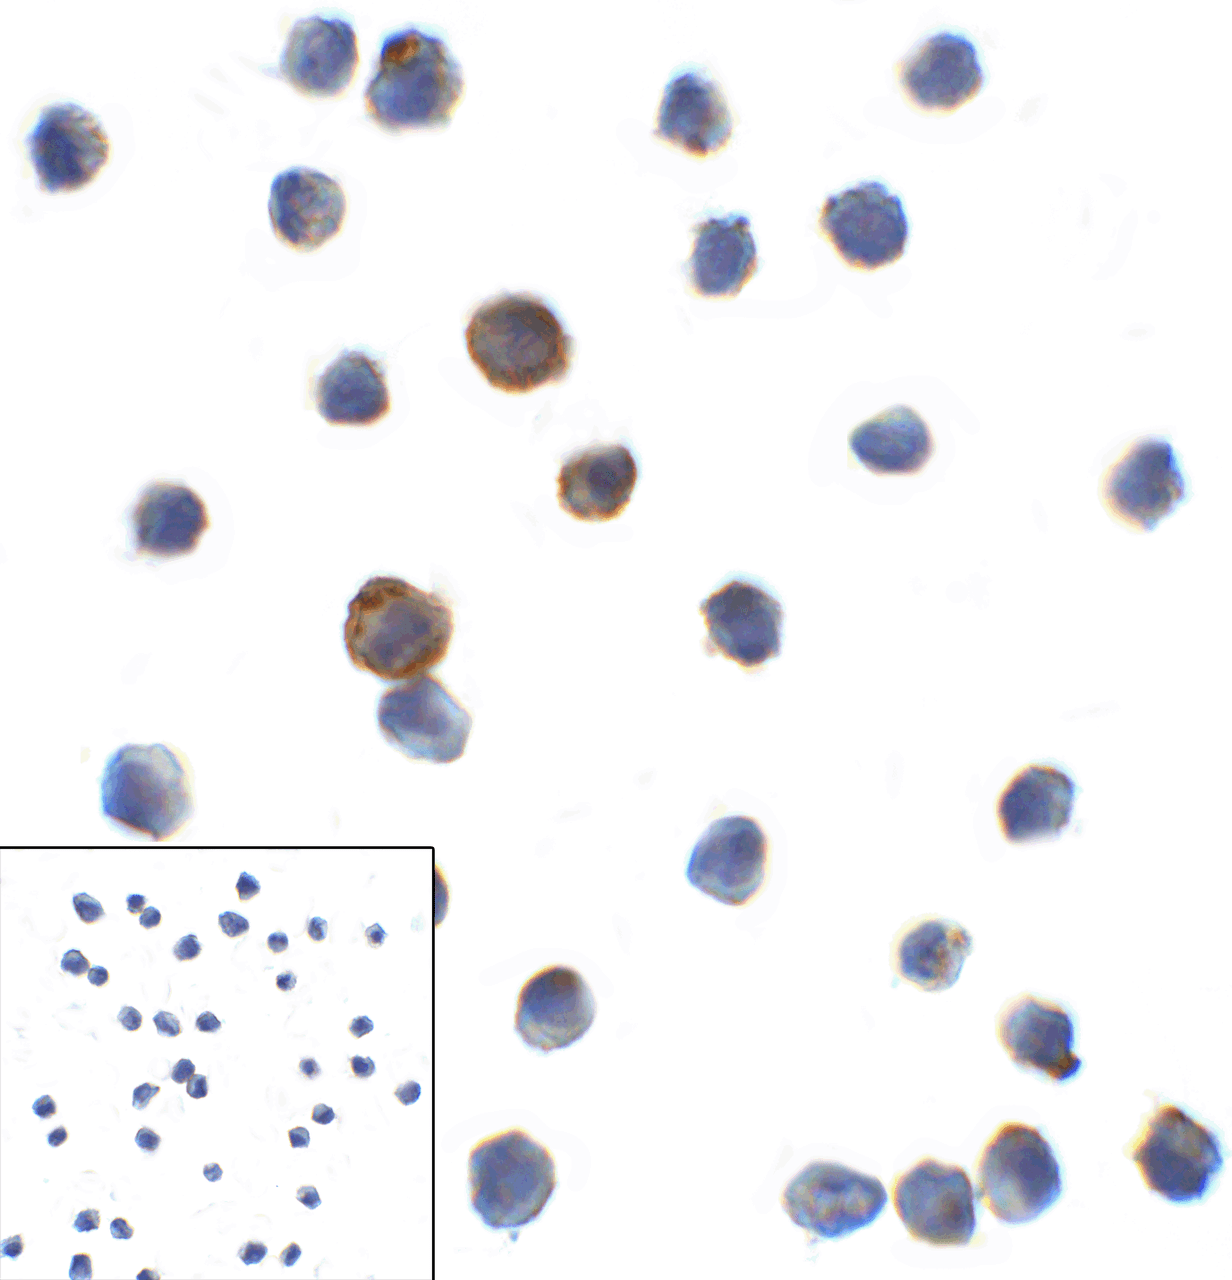 Immunocytochemistry of LAG-3 in over expressing HEK293 cells using LAG-3 antibody and control mouse IgG antibody (left corner box) at 1 ug/ml.